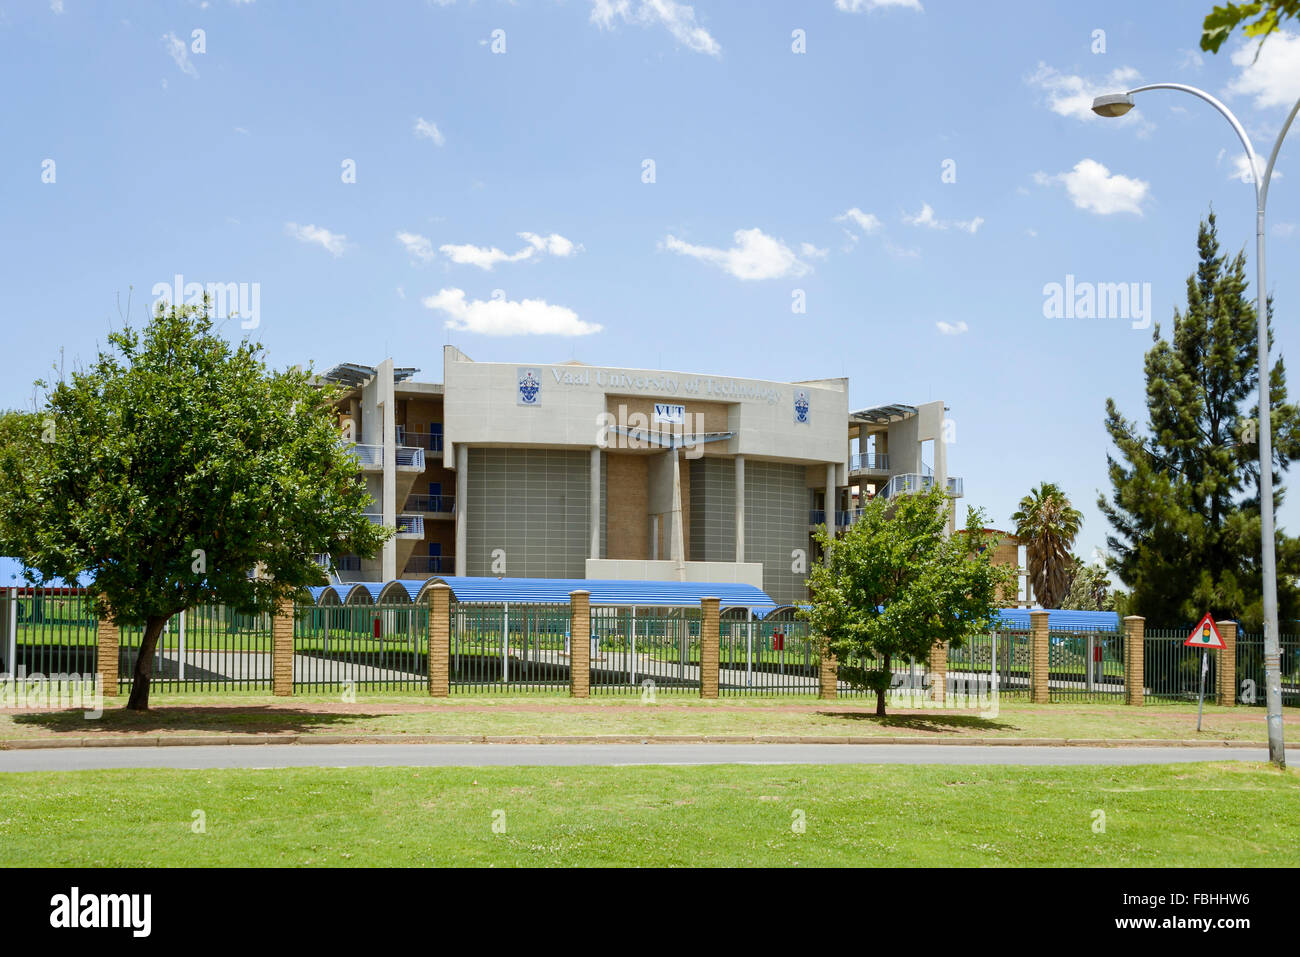 Vaal University of Technology, Vanderbijlpark, Emfuleni Metropolitan Municipality, Gauteng Province, Republic of South Africa Stock Photo